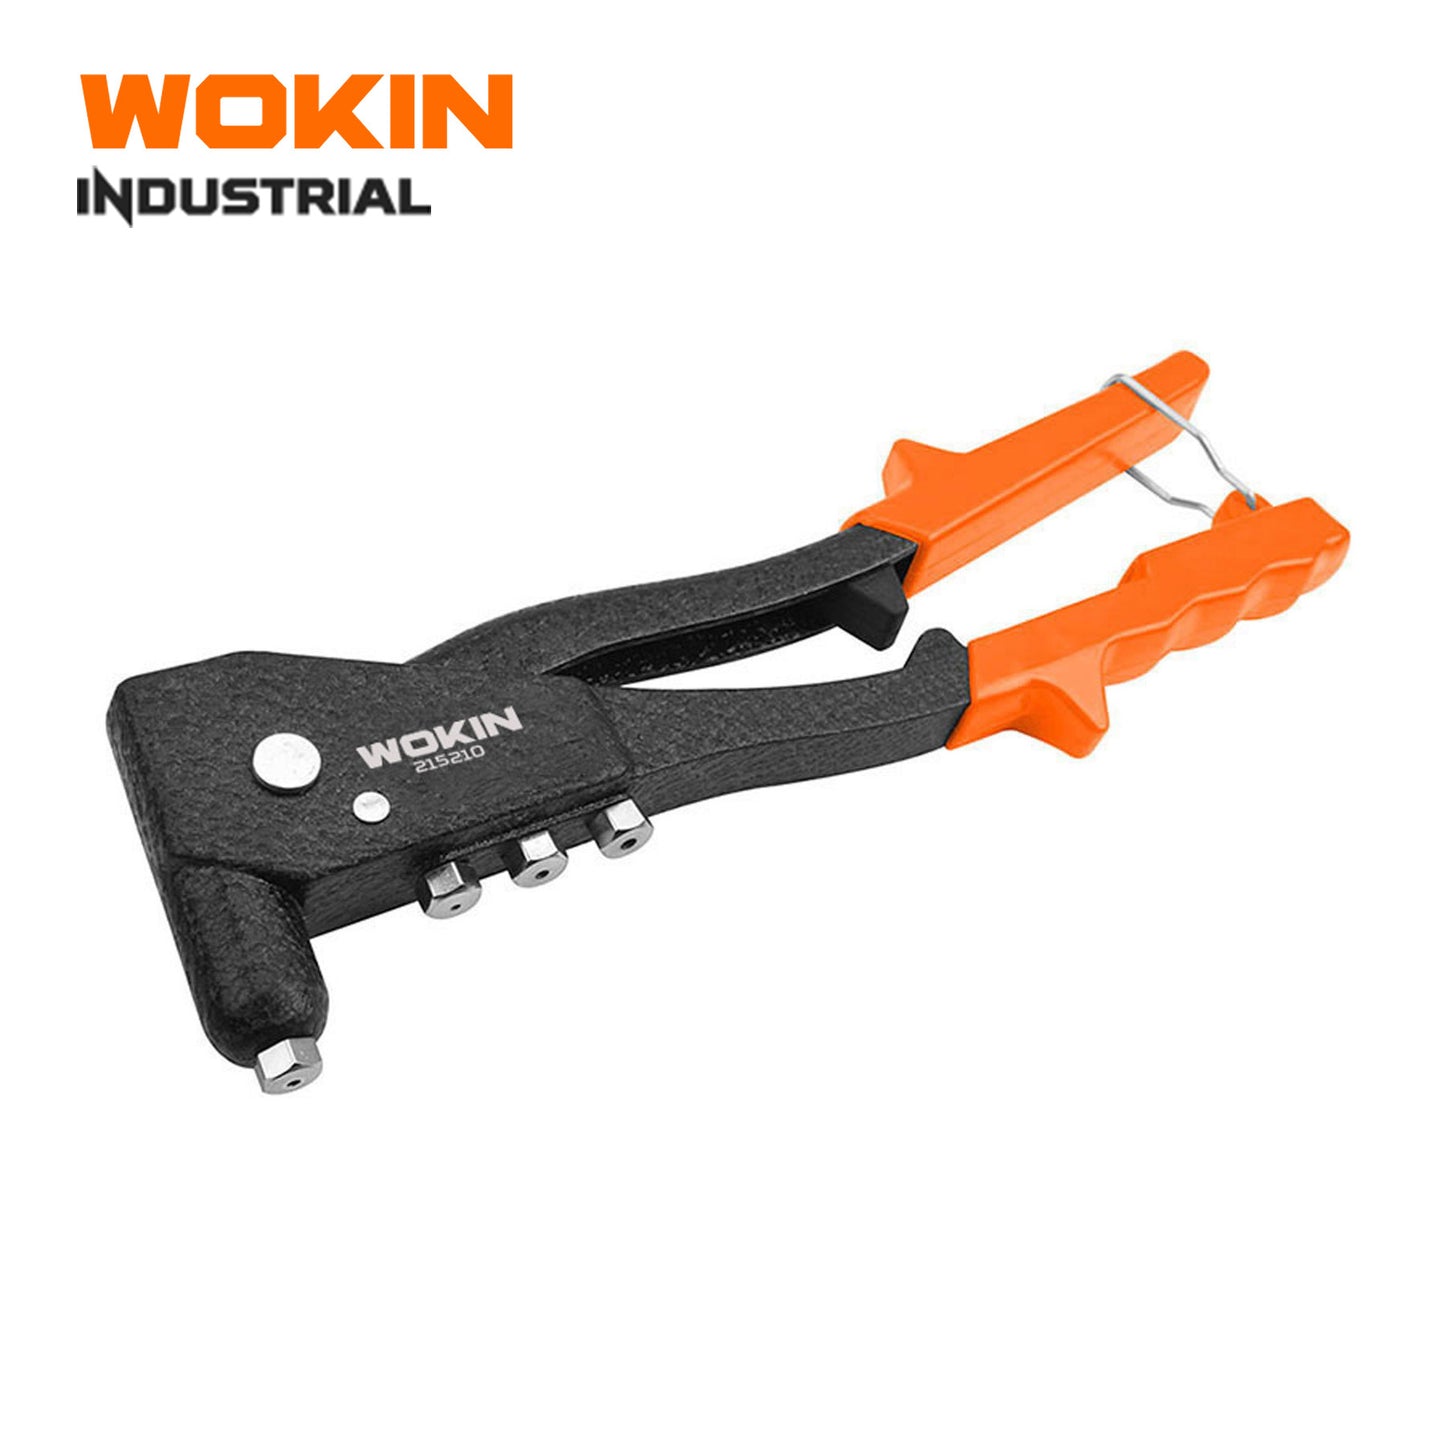 Wokin Industrial Hand Riveter 10.5 Inch